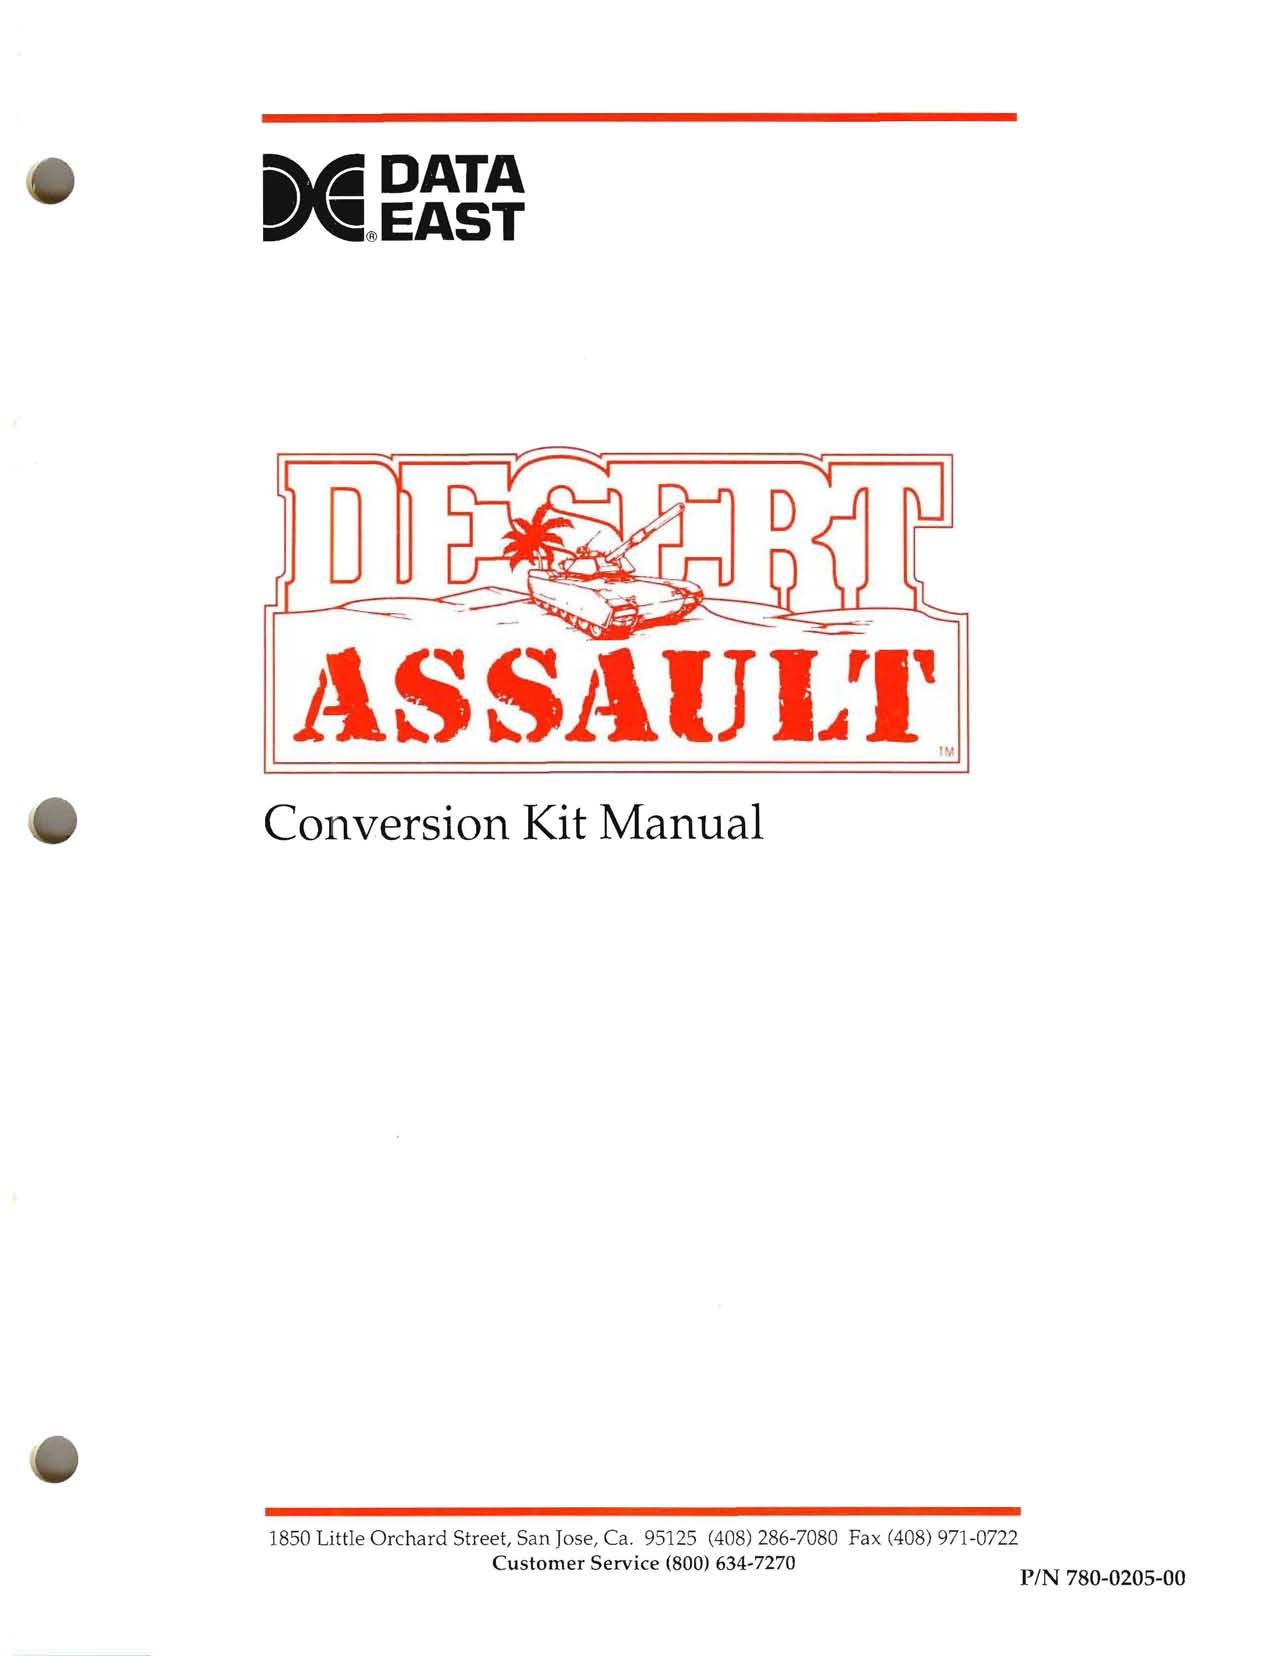 Desert Assualt Conversion Kit Manual (780-0205-00)